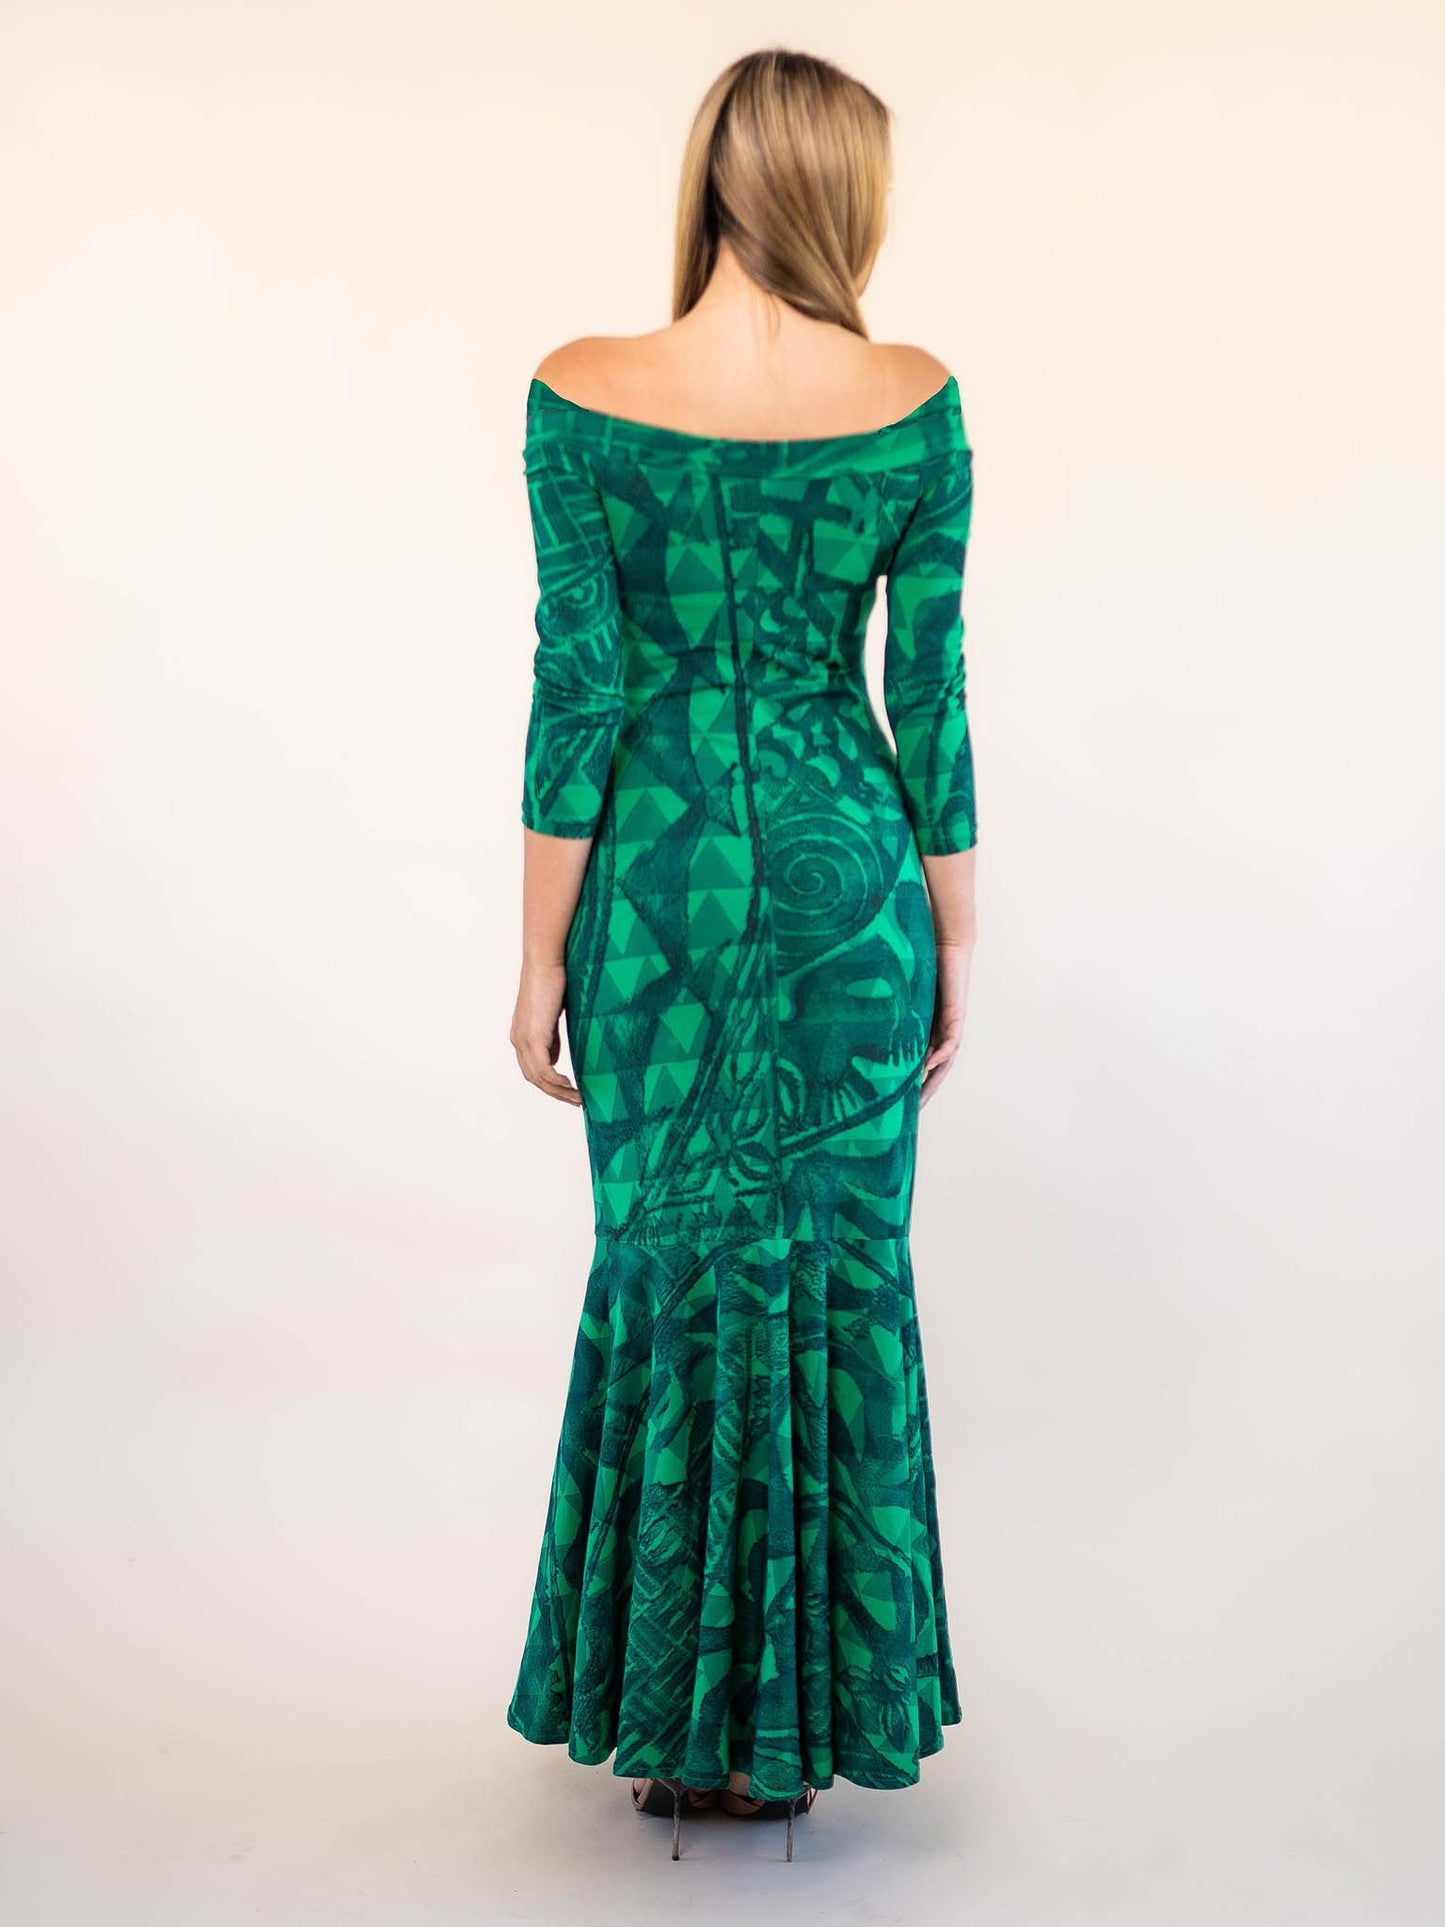 Vaihiria Dress - Emerald